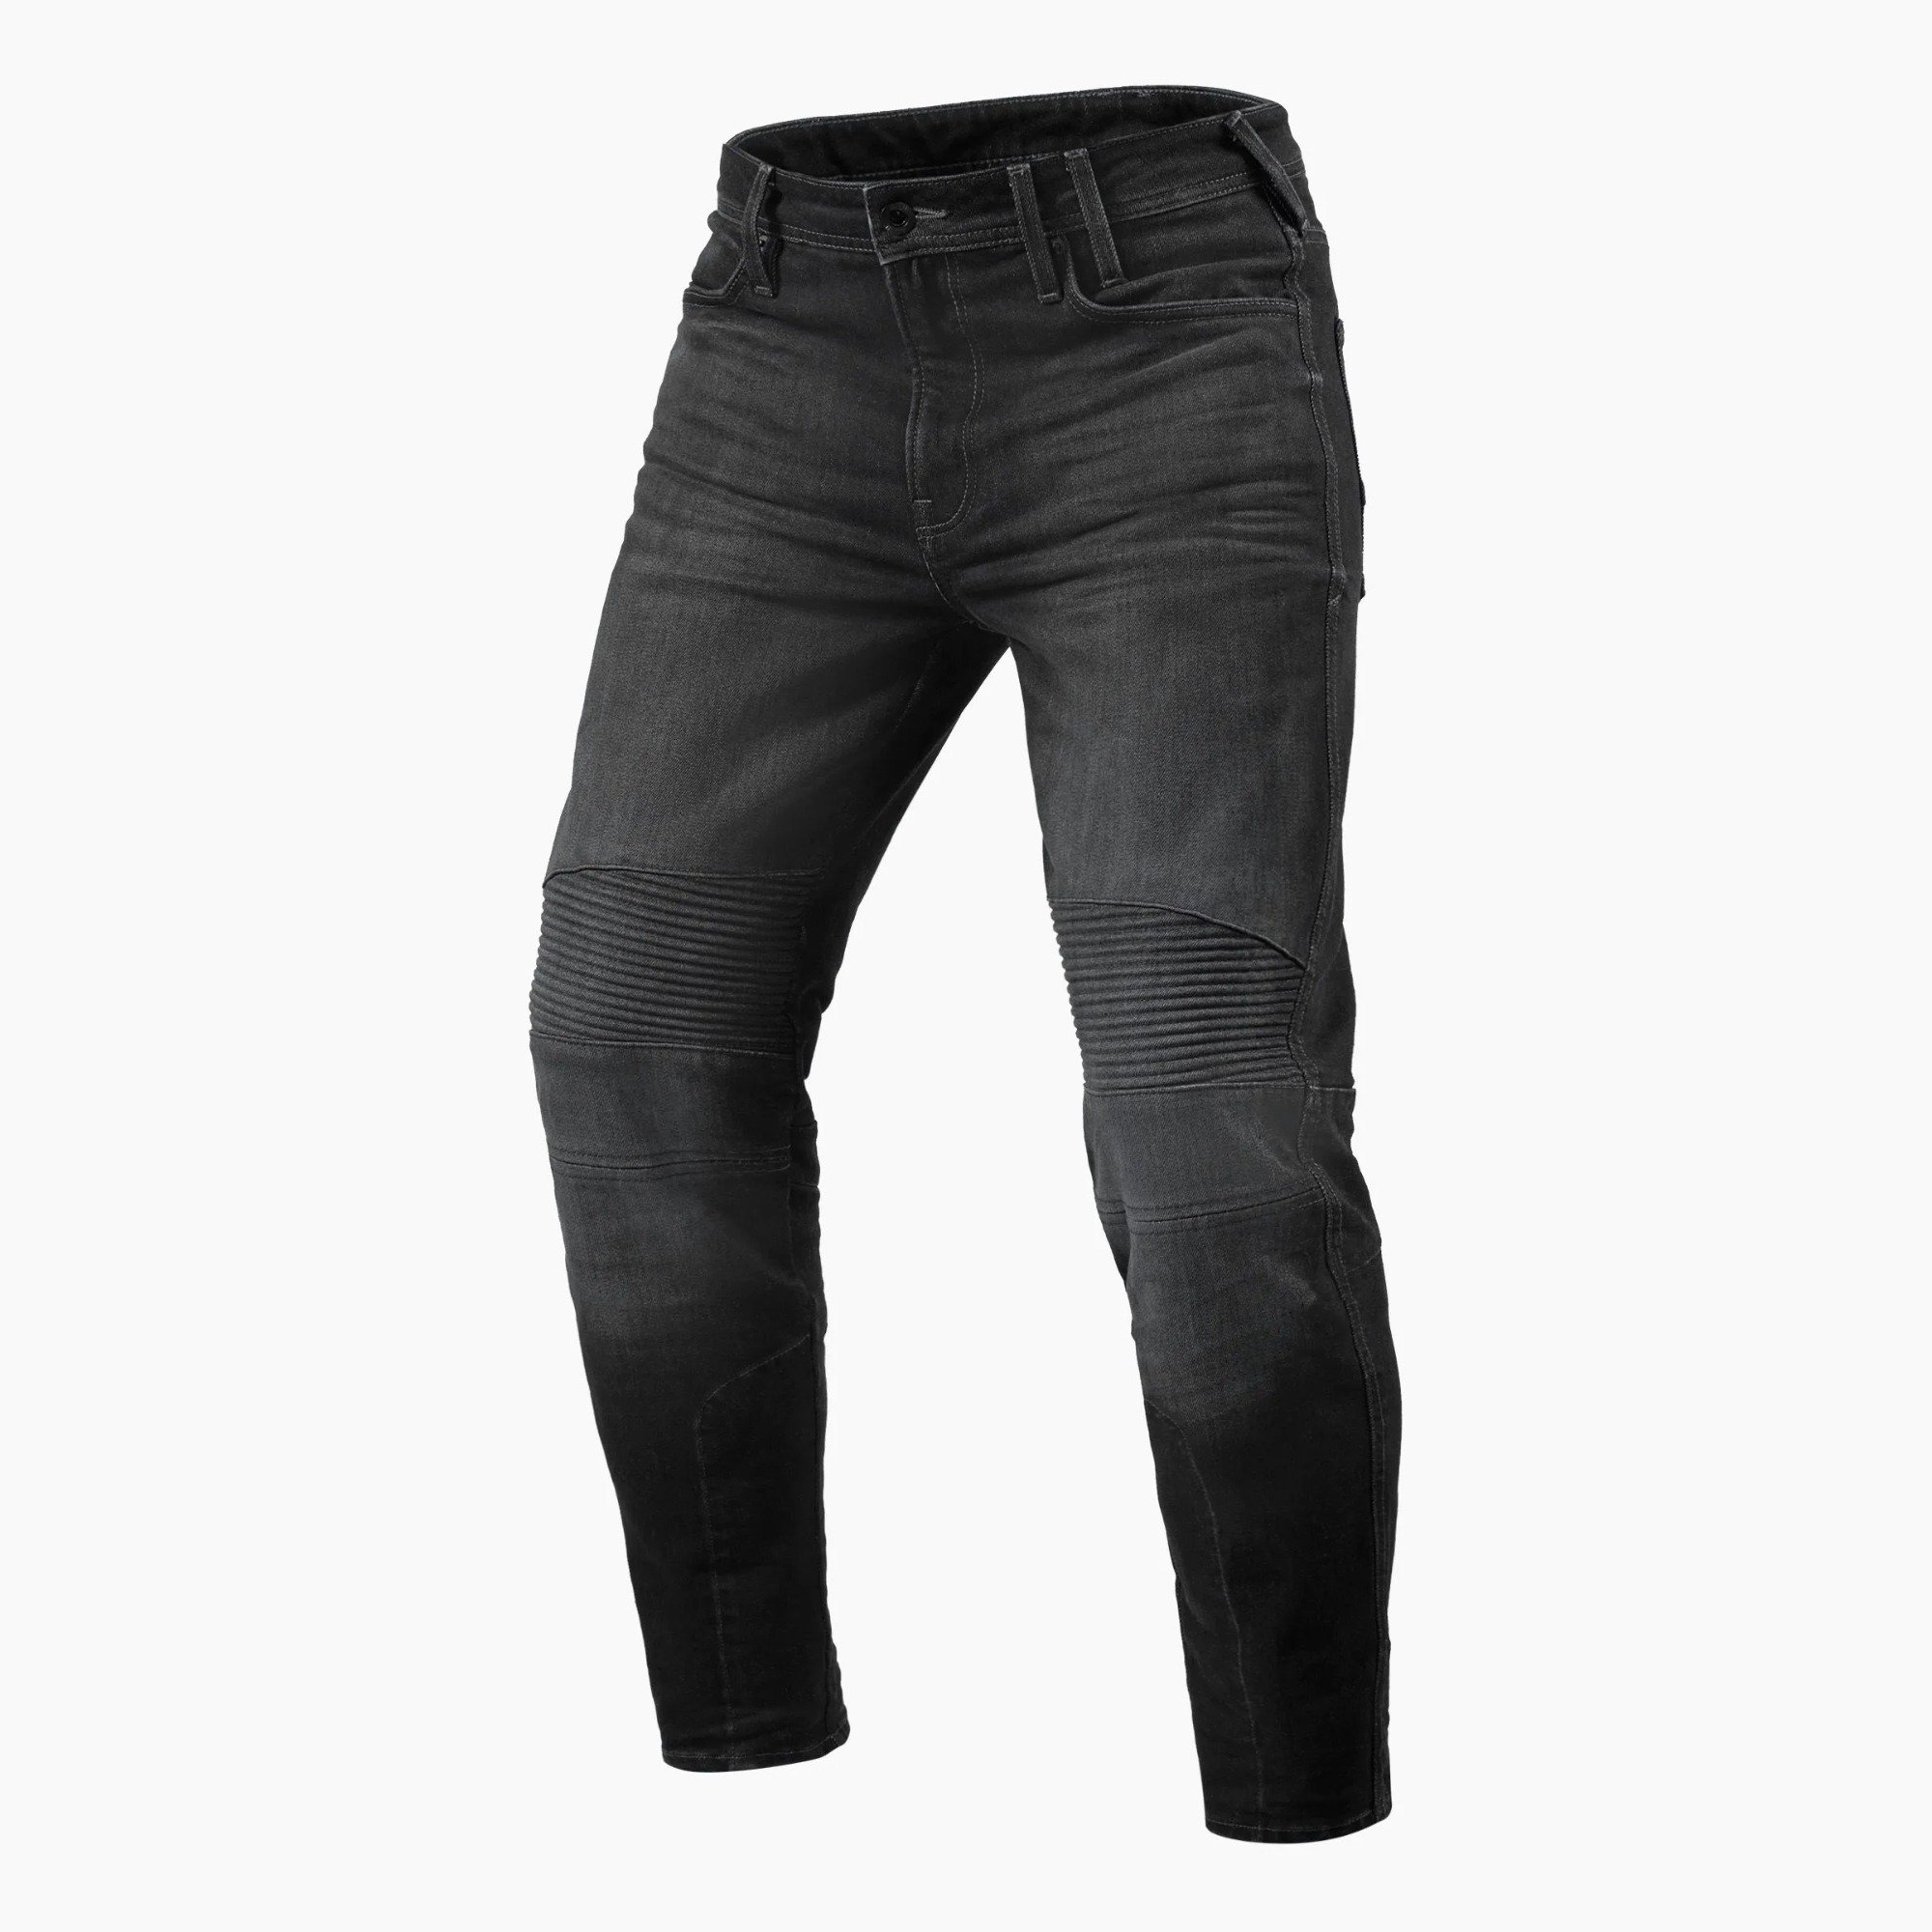 Image of REV'IT! Jeans Moto 2 TF Dark Grey Used Motorcycle Jeans Talla L34/W30